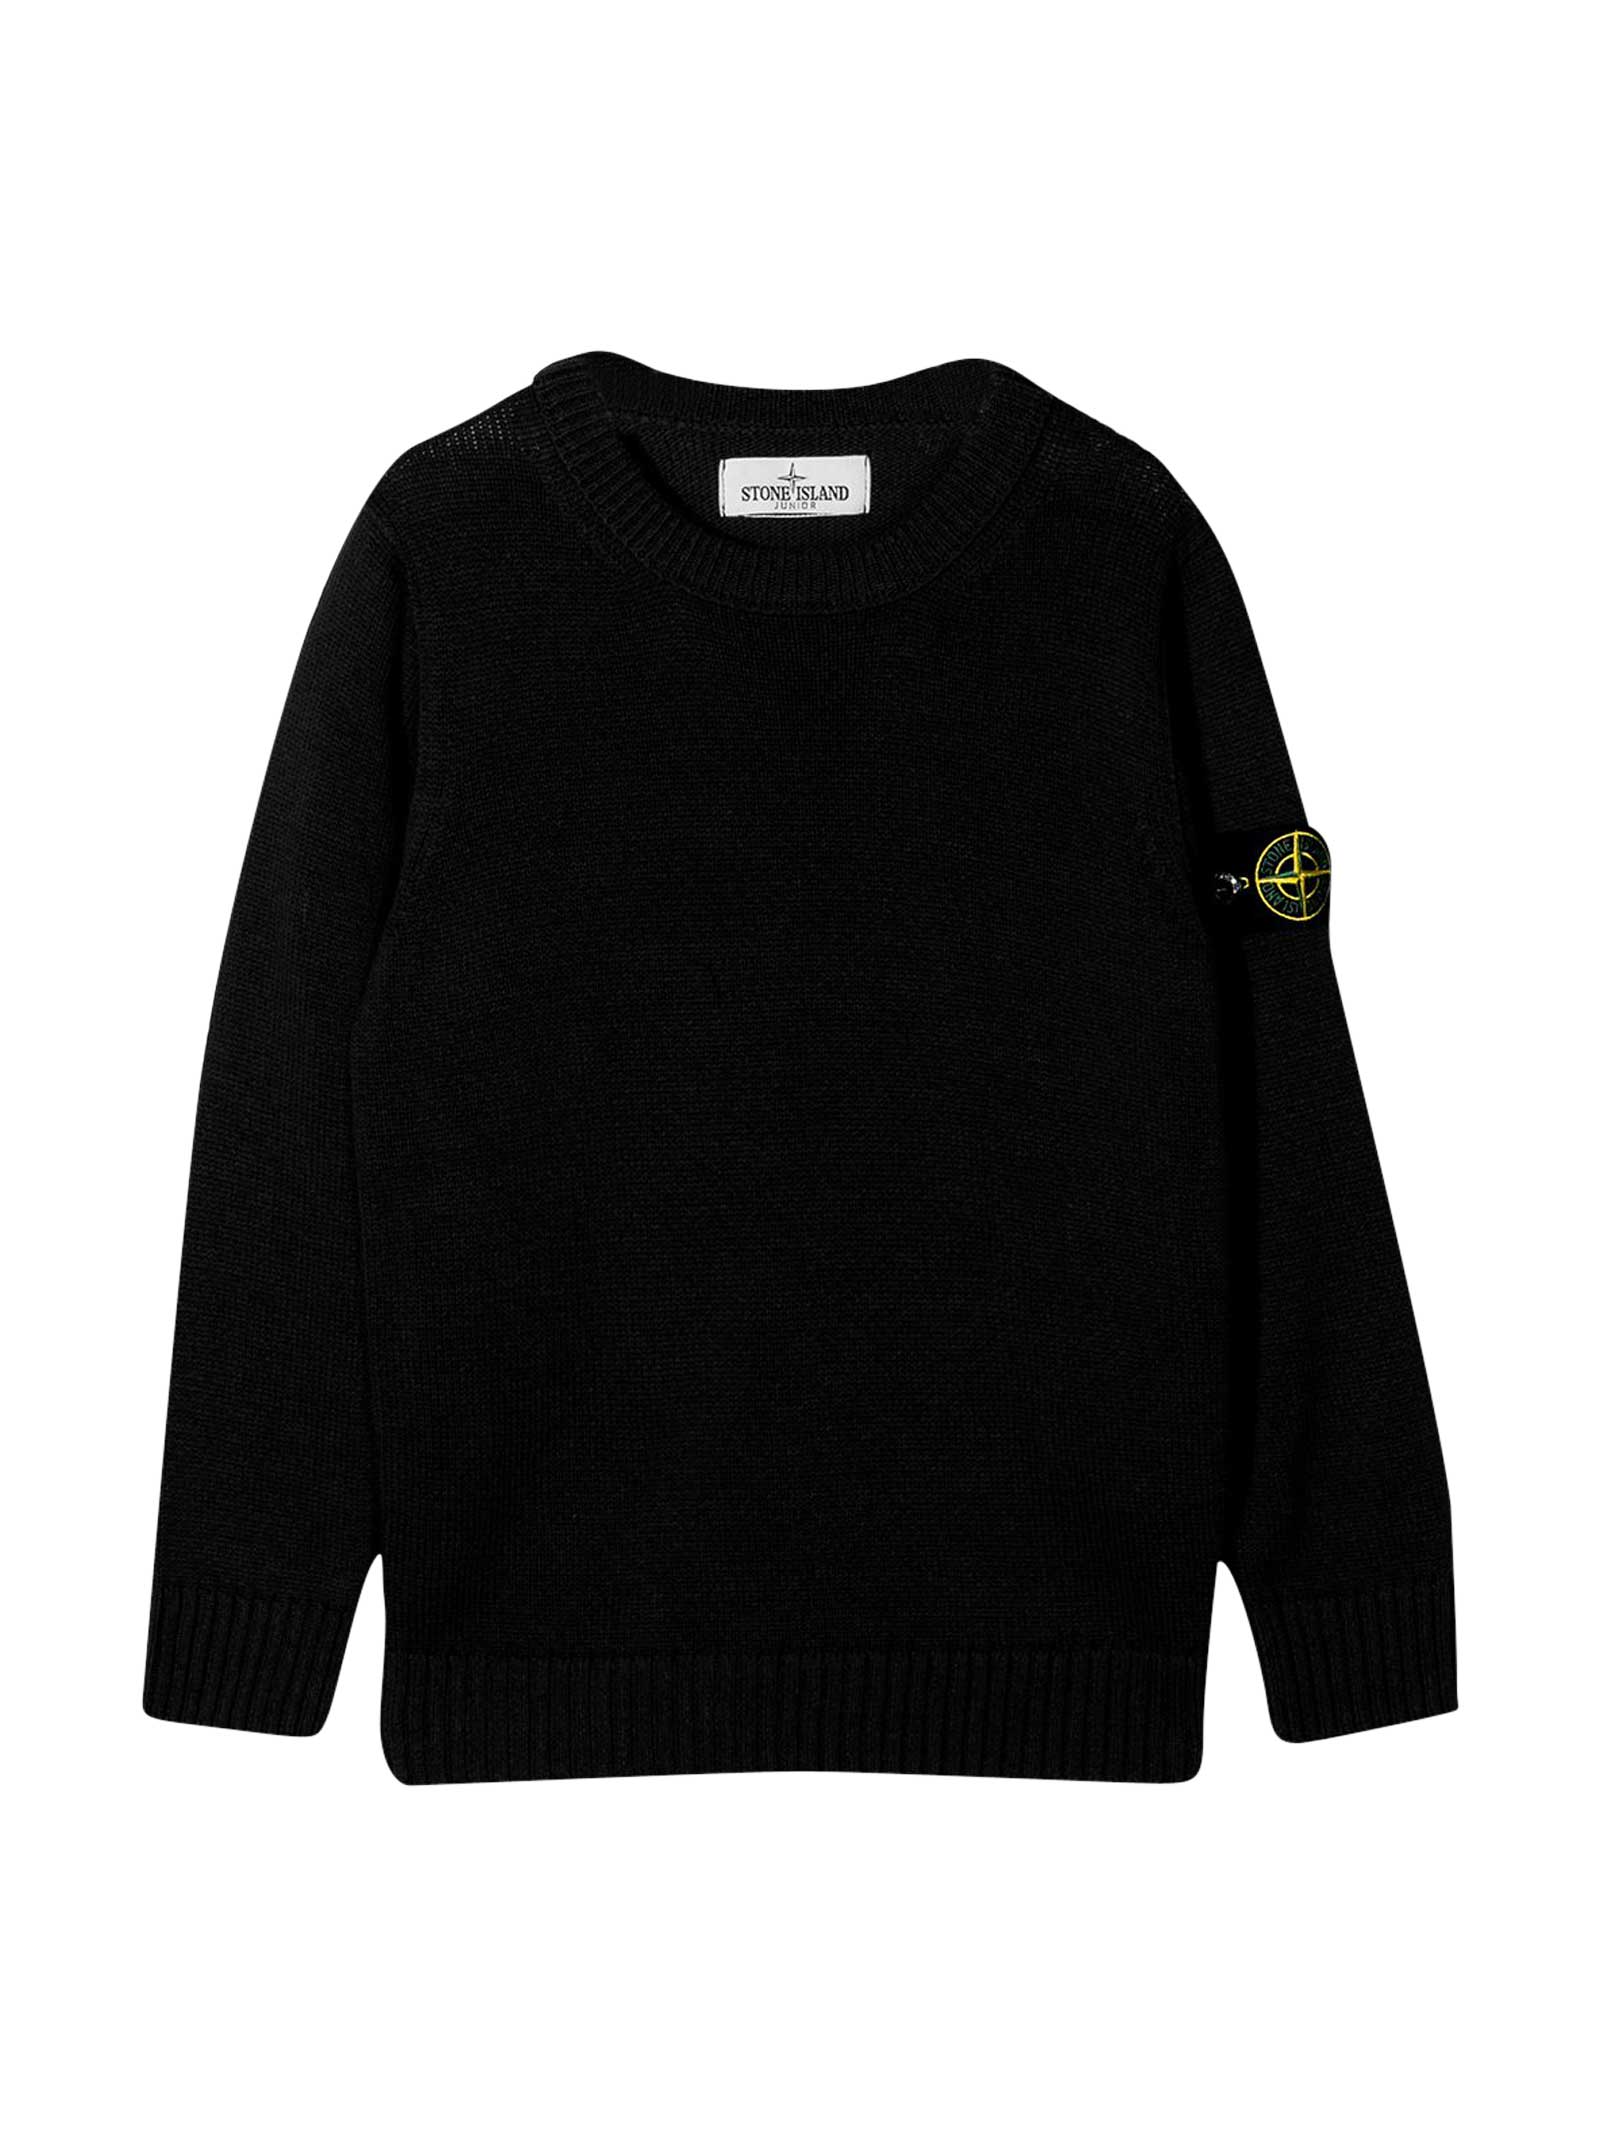 Stone Island Junior Teen Black Sweater